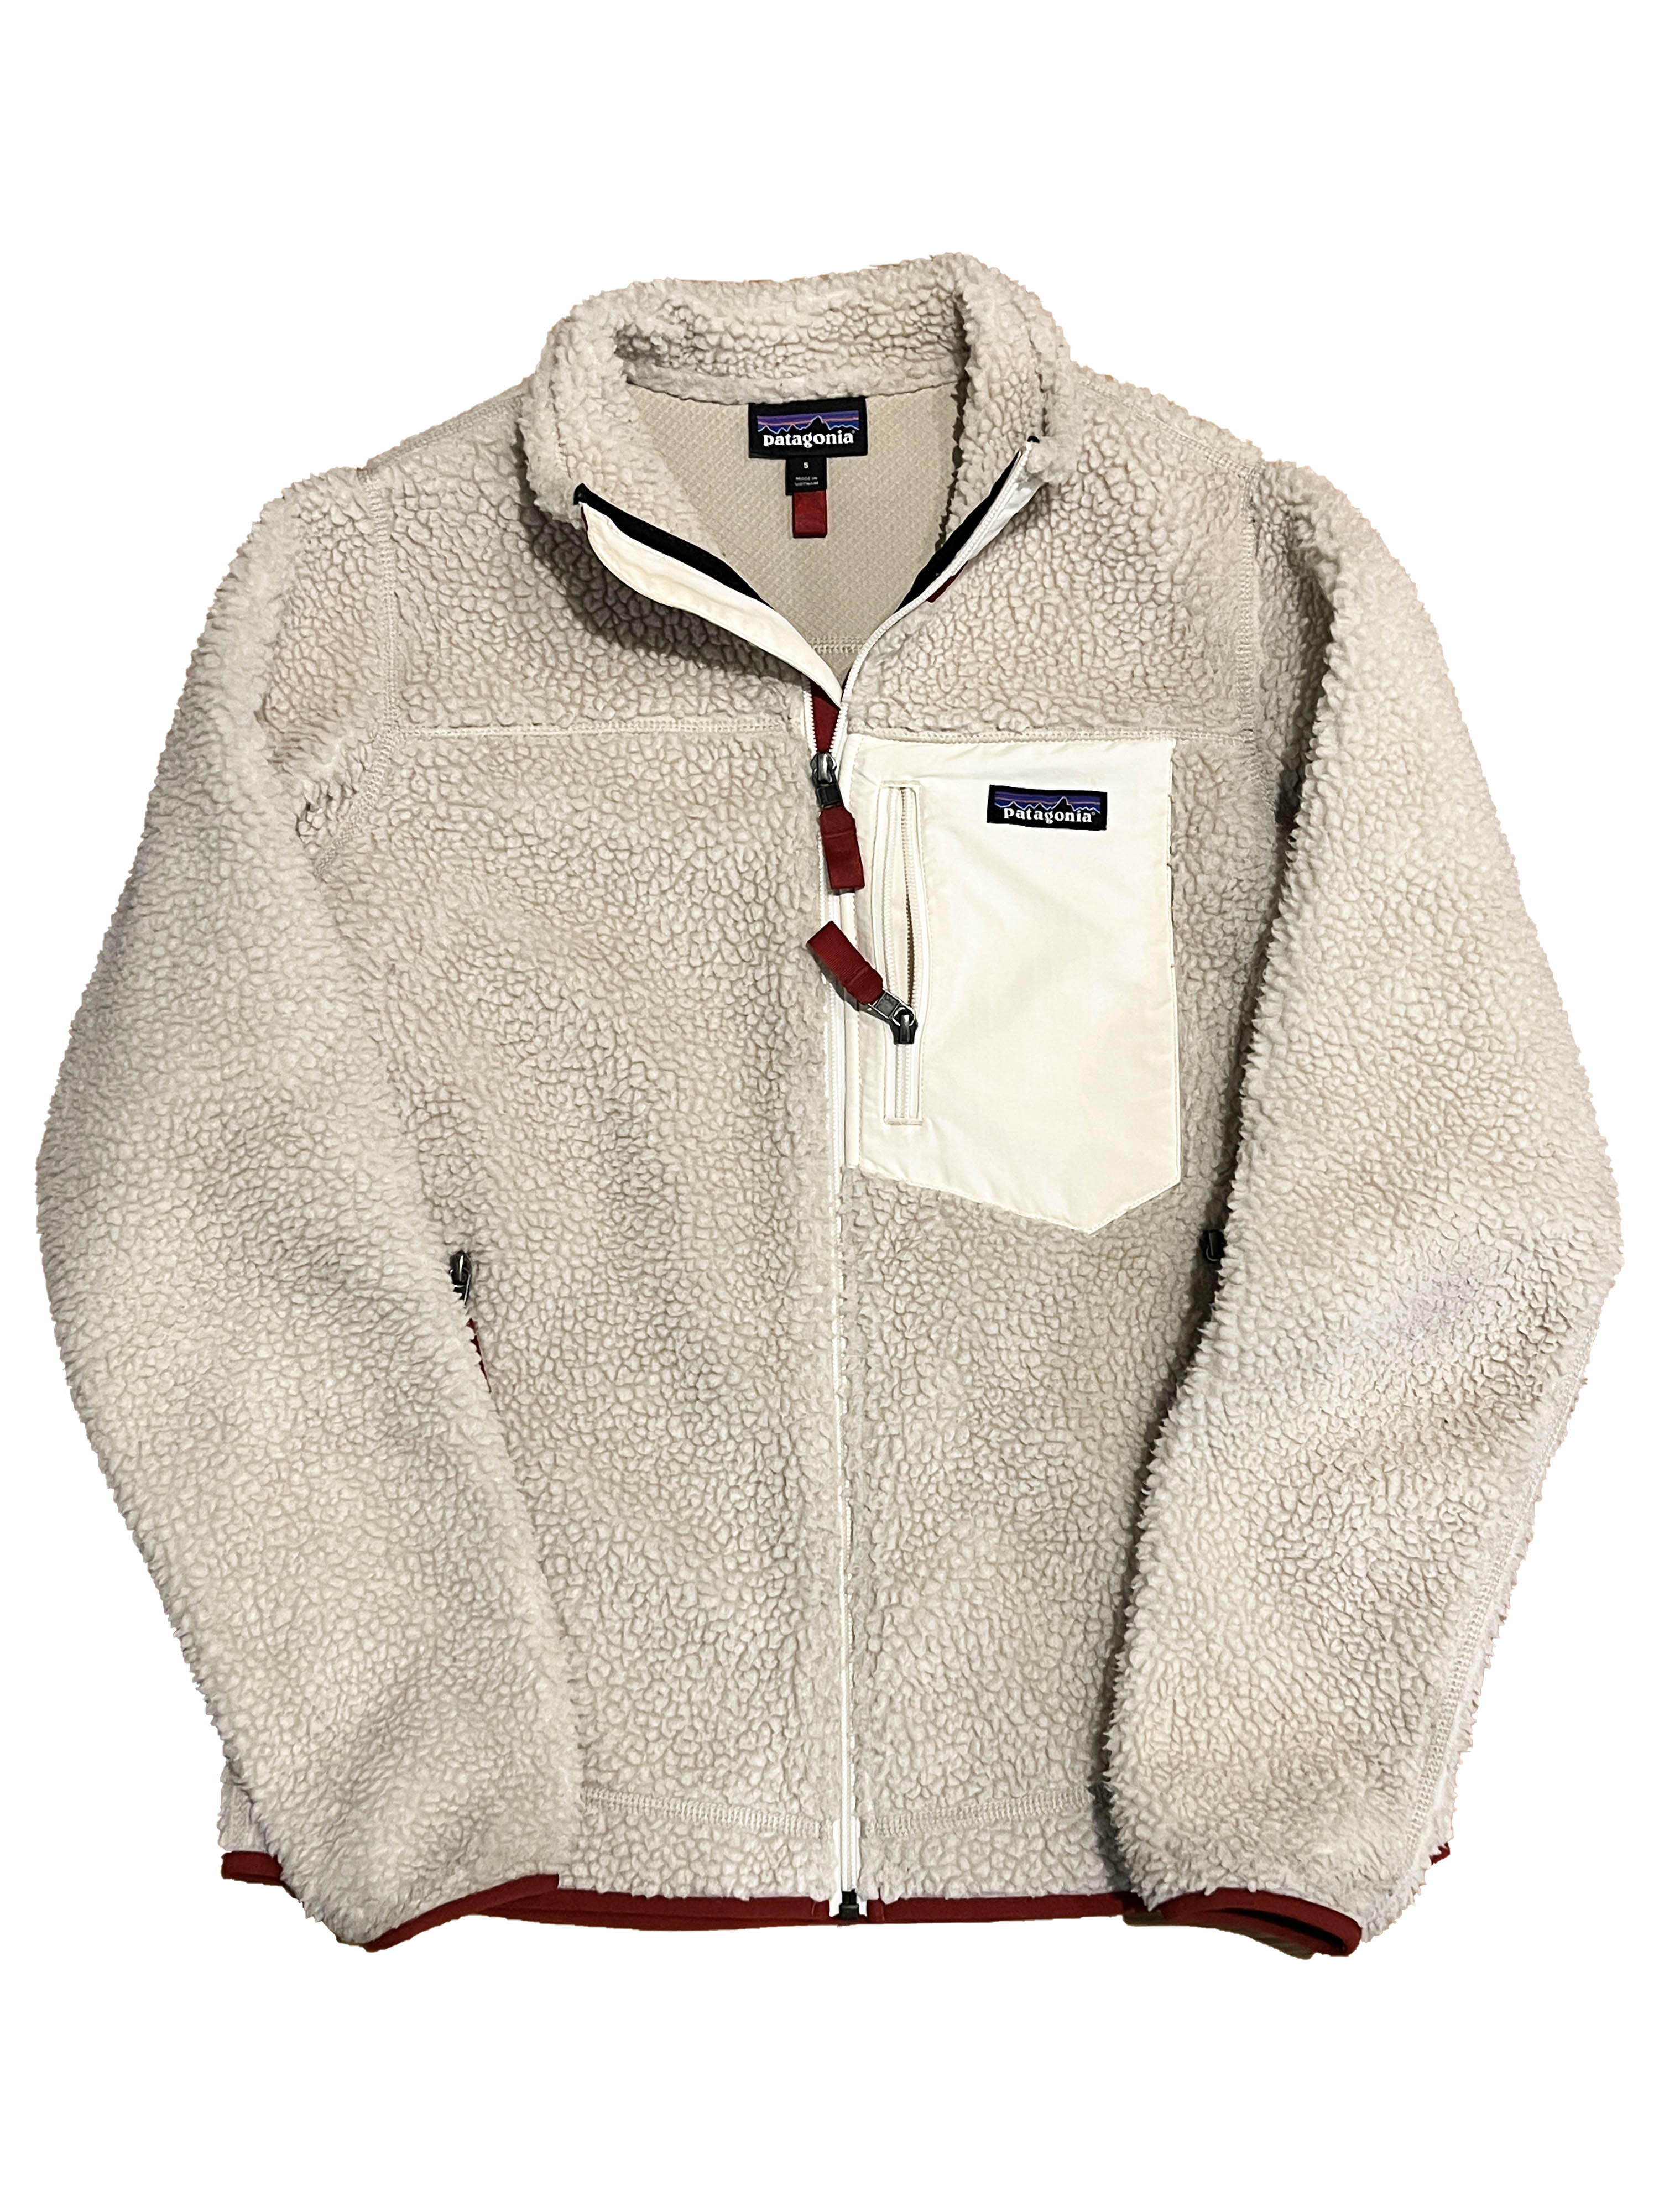 patagonia retro fleece jacket